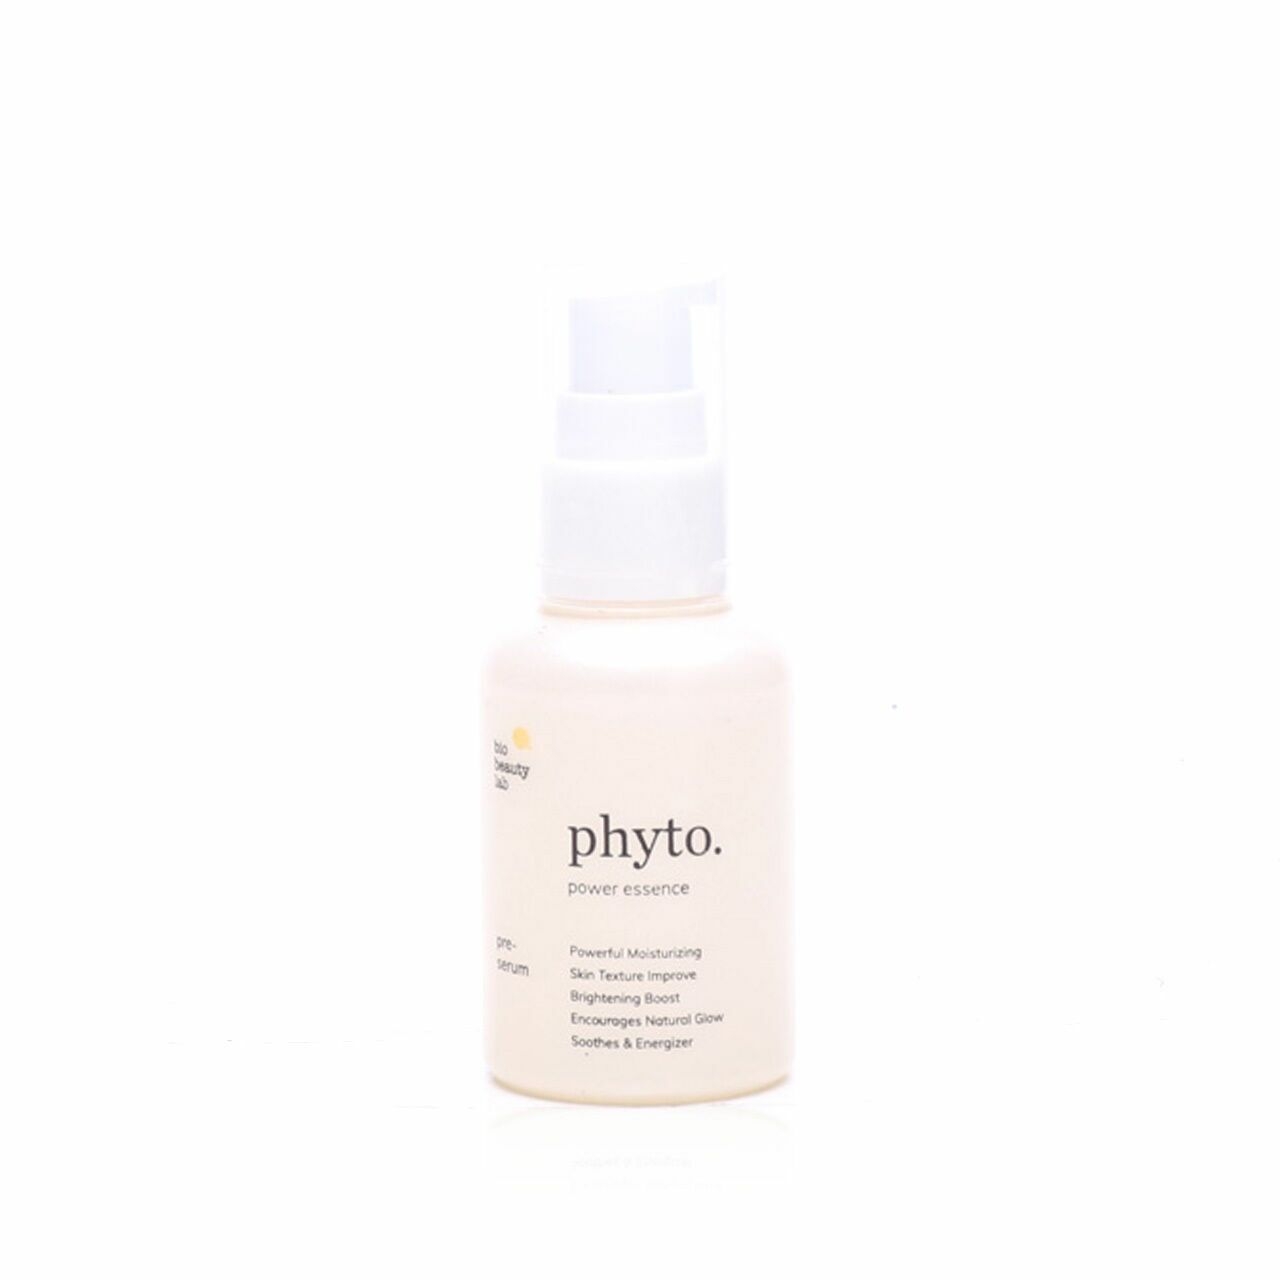 Bio Beauty Lab Phyto Power Essence Skin Care